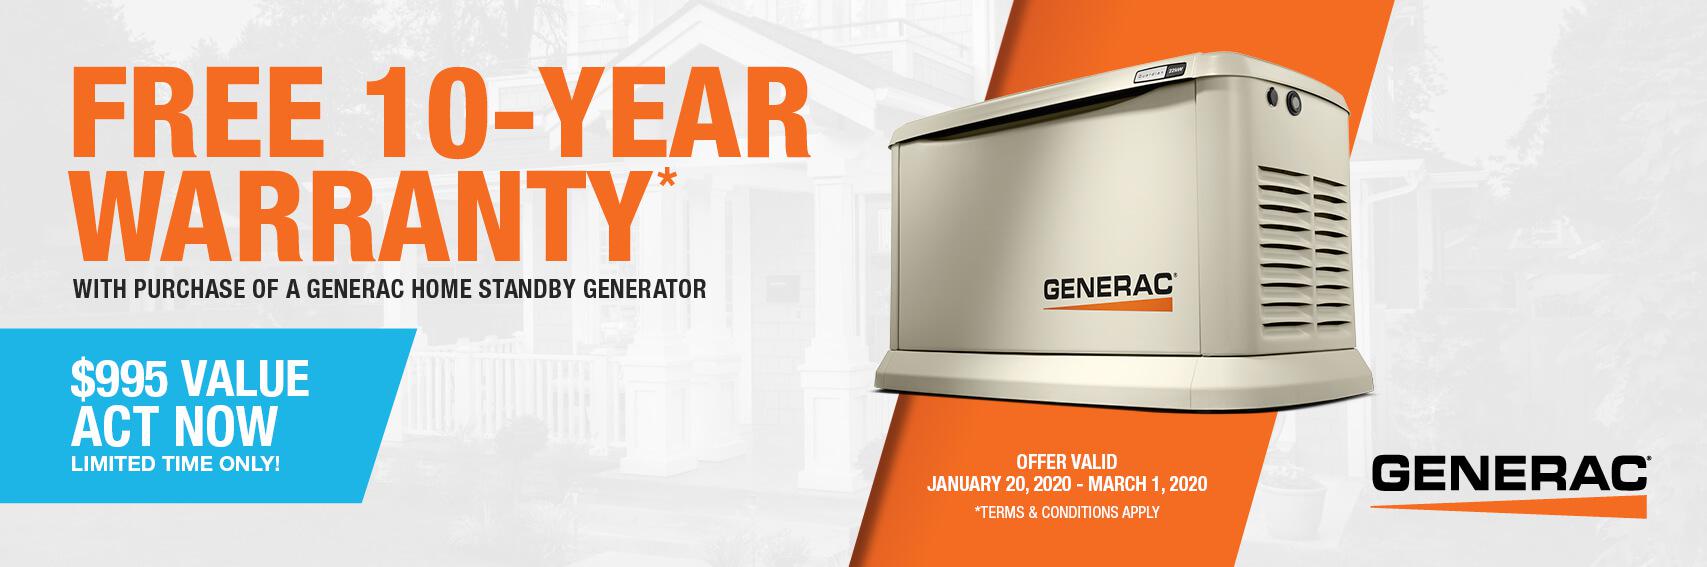 Homestandby Generator Deal | Warranty Offer | Generac Dealer | Reeds Spring, MO